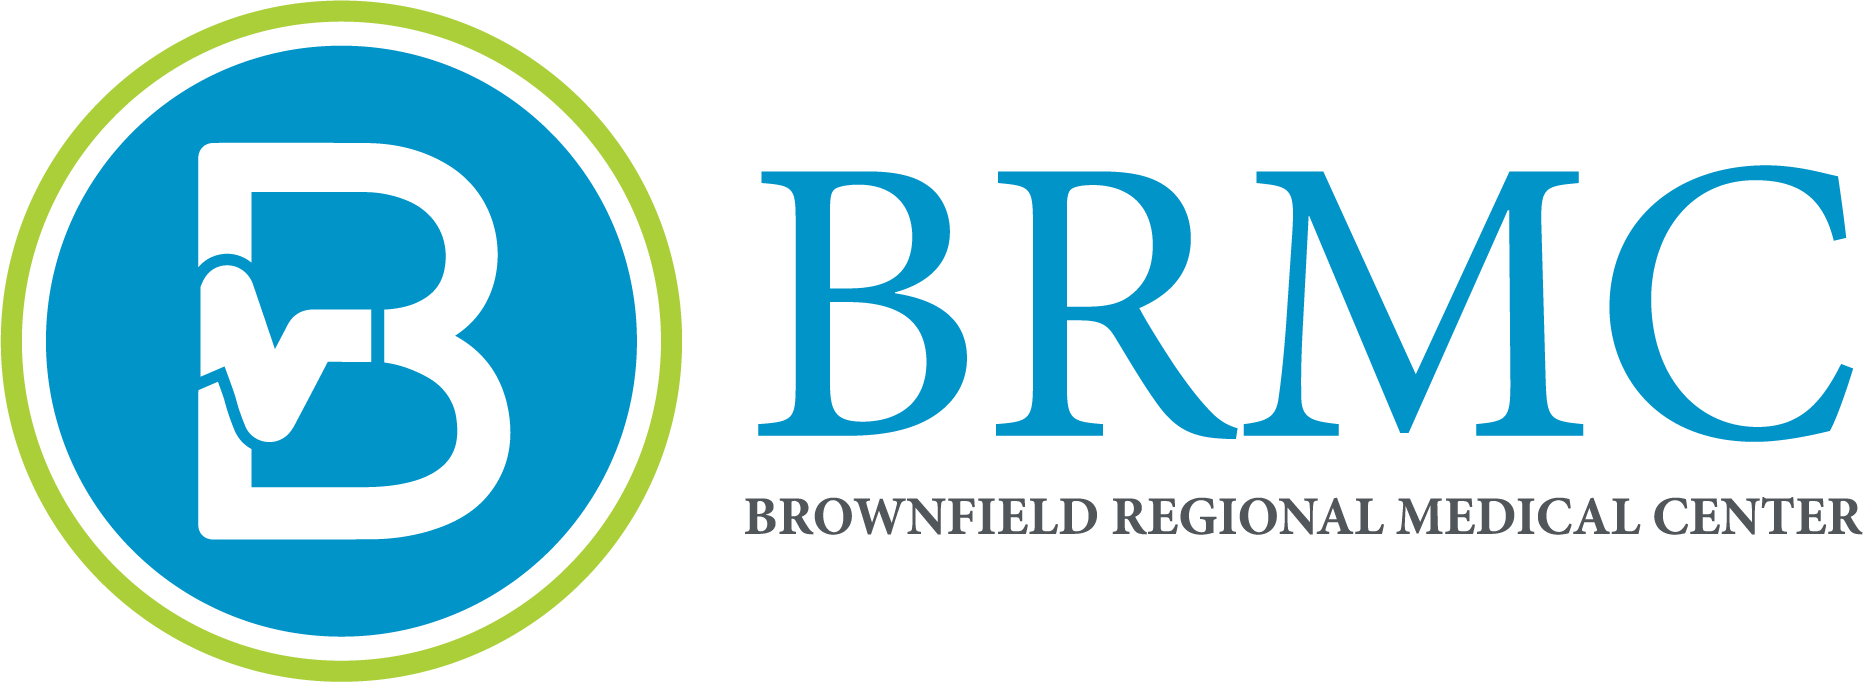 Brownfield Regional Medical Center logo